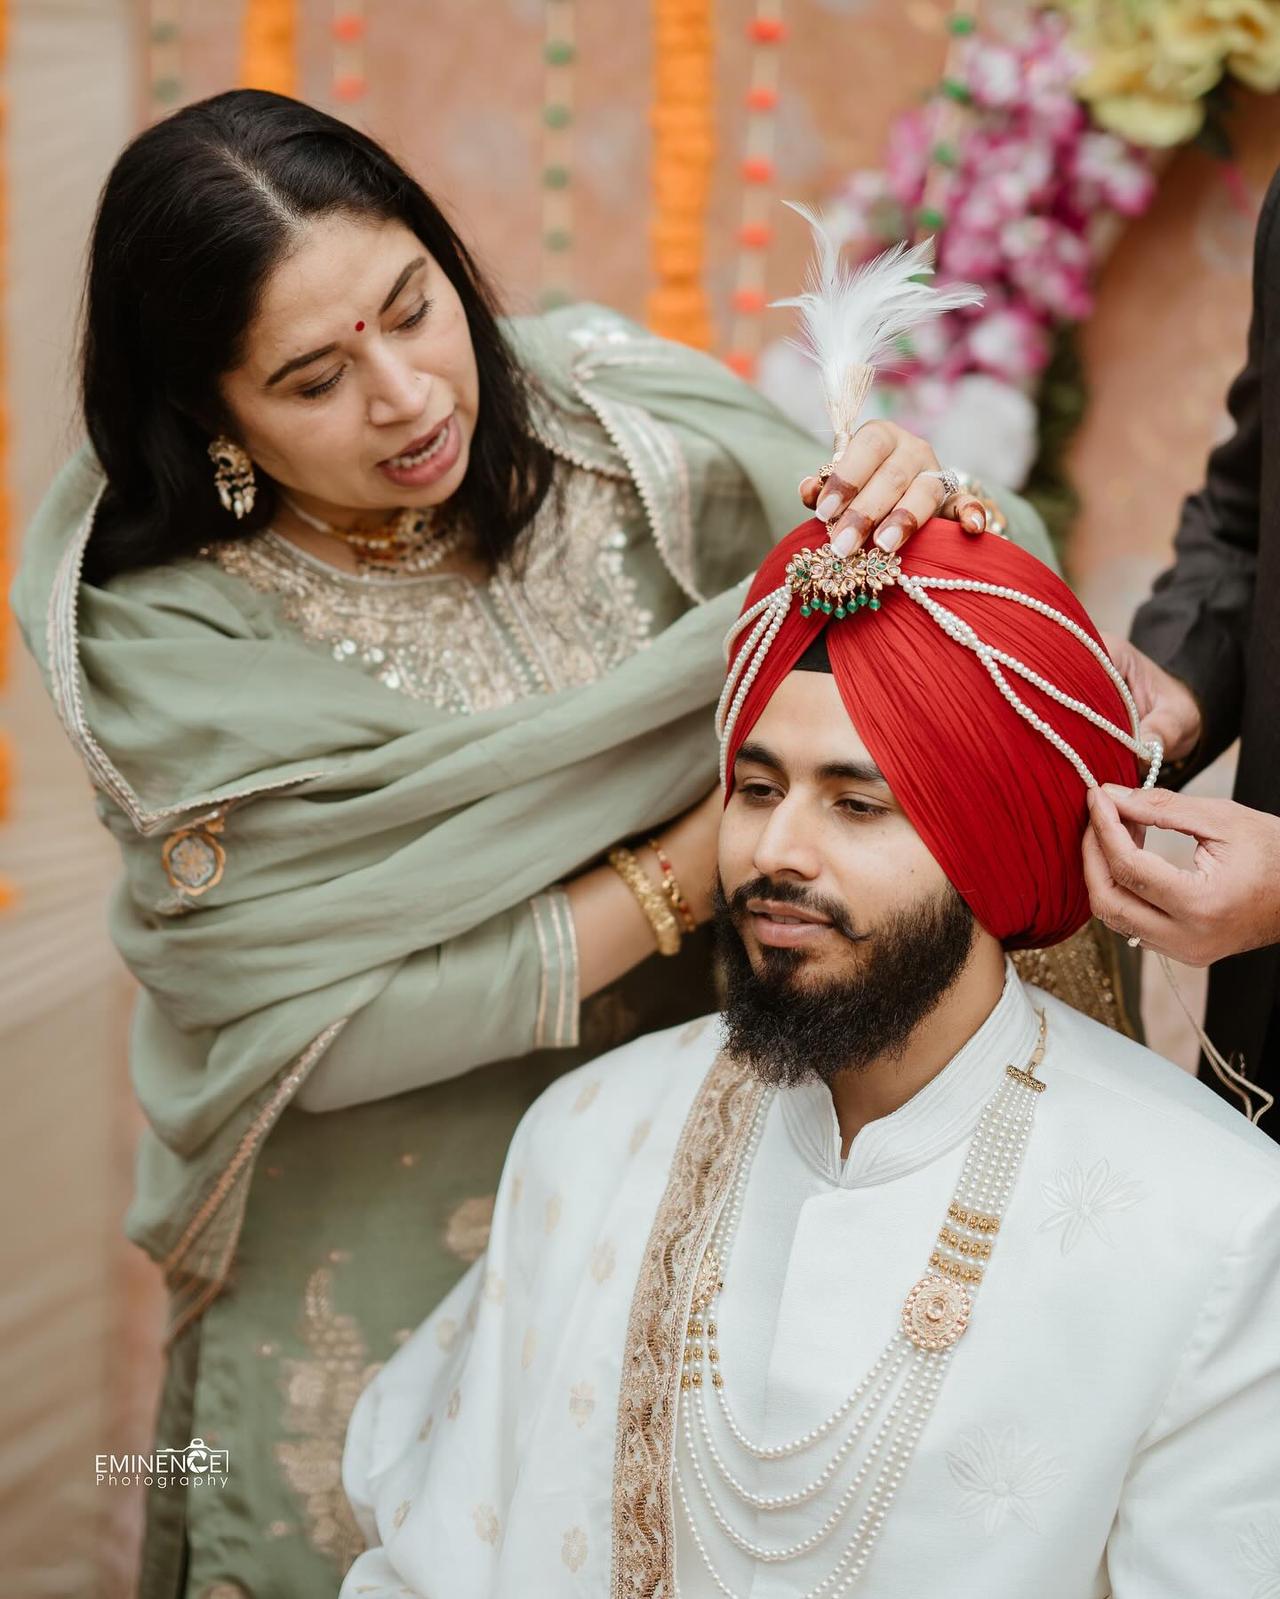 Pin @zaildarni | Indian bride photography poses, Indian wedding couple,  Indian wedding photography poses